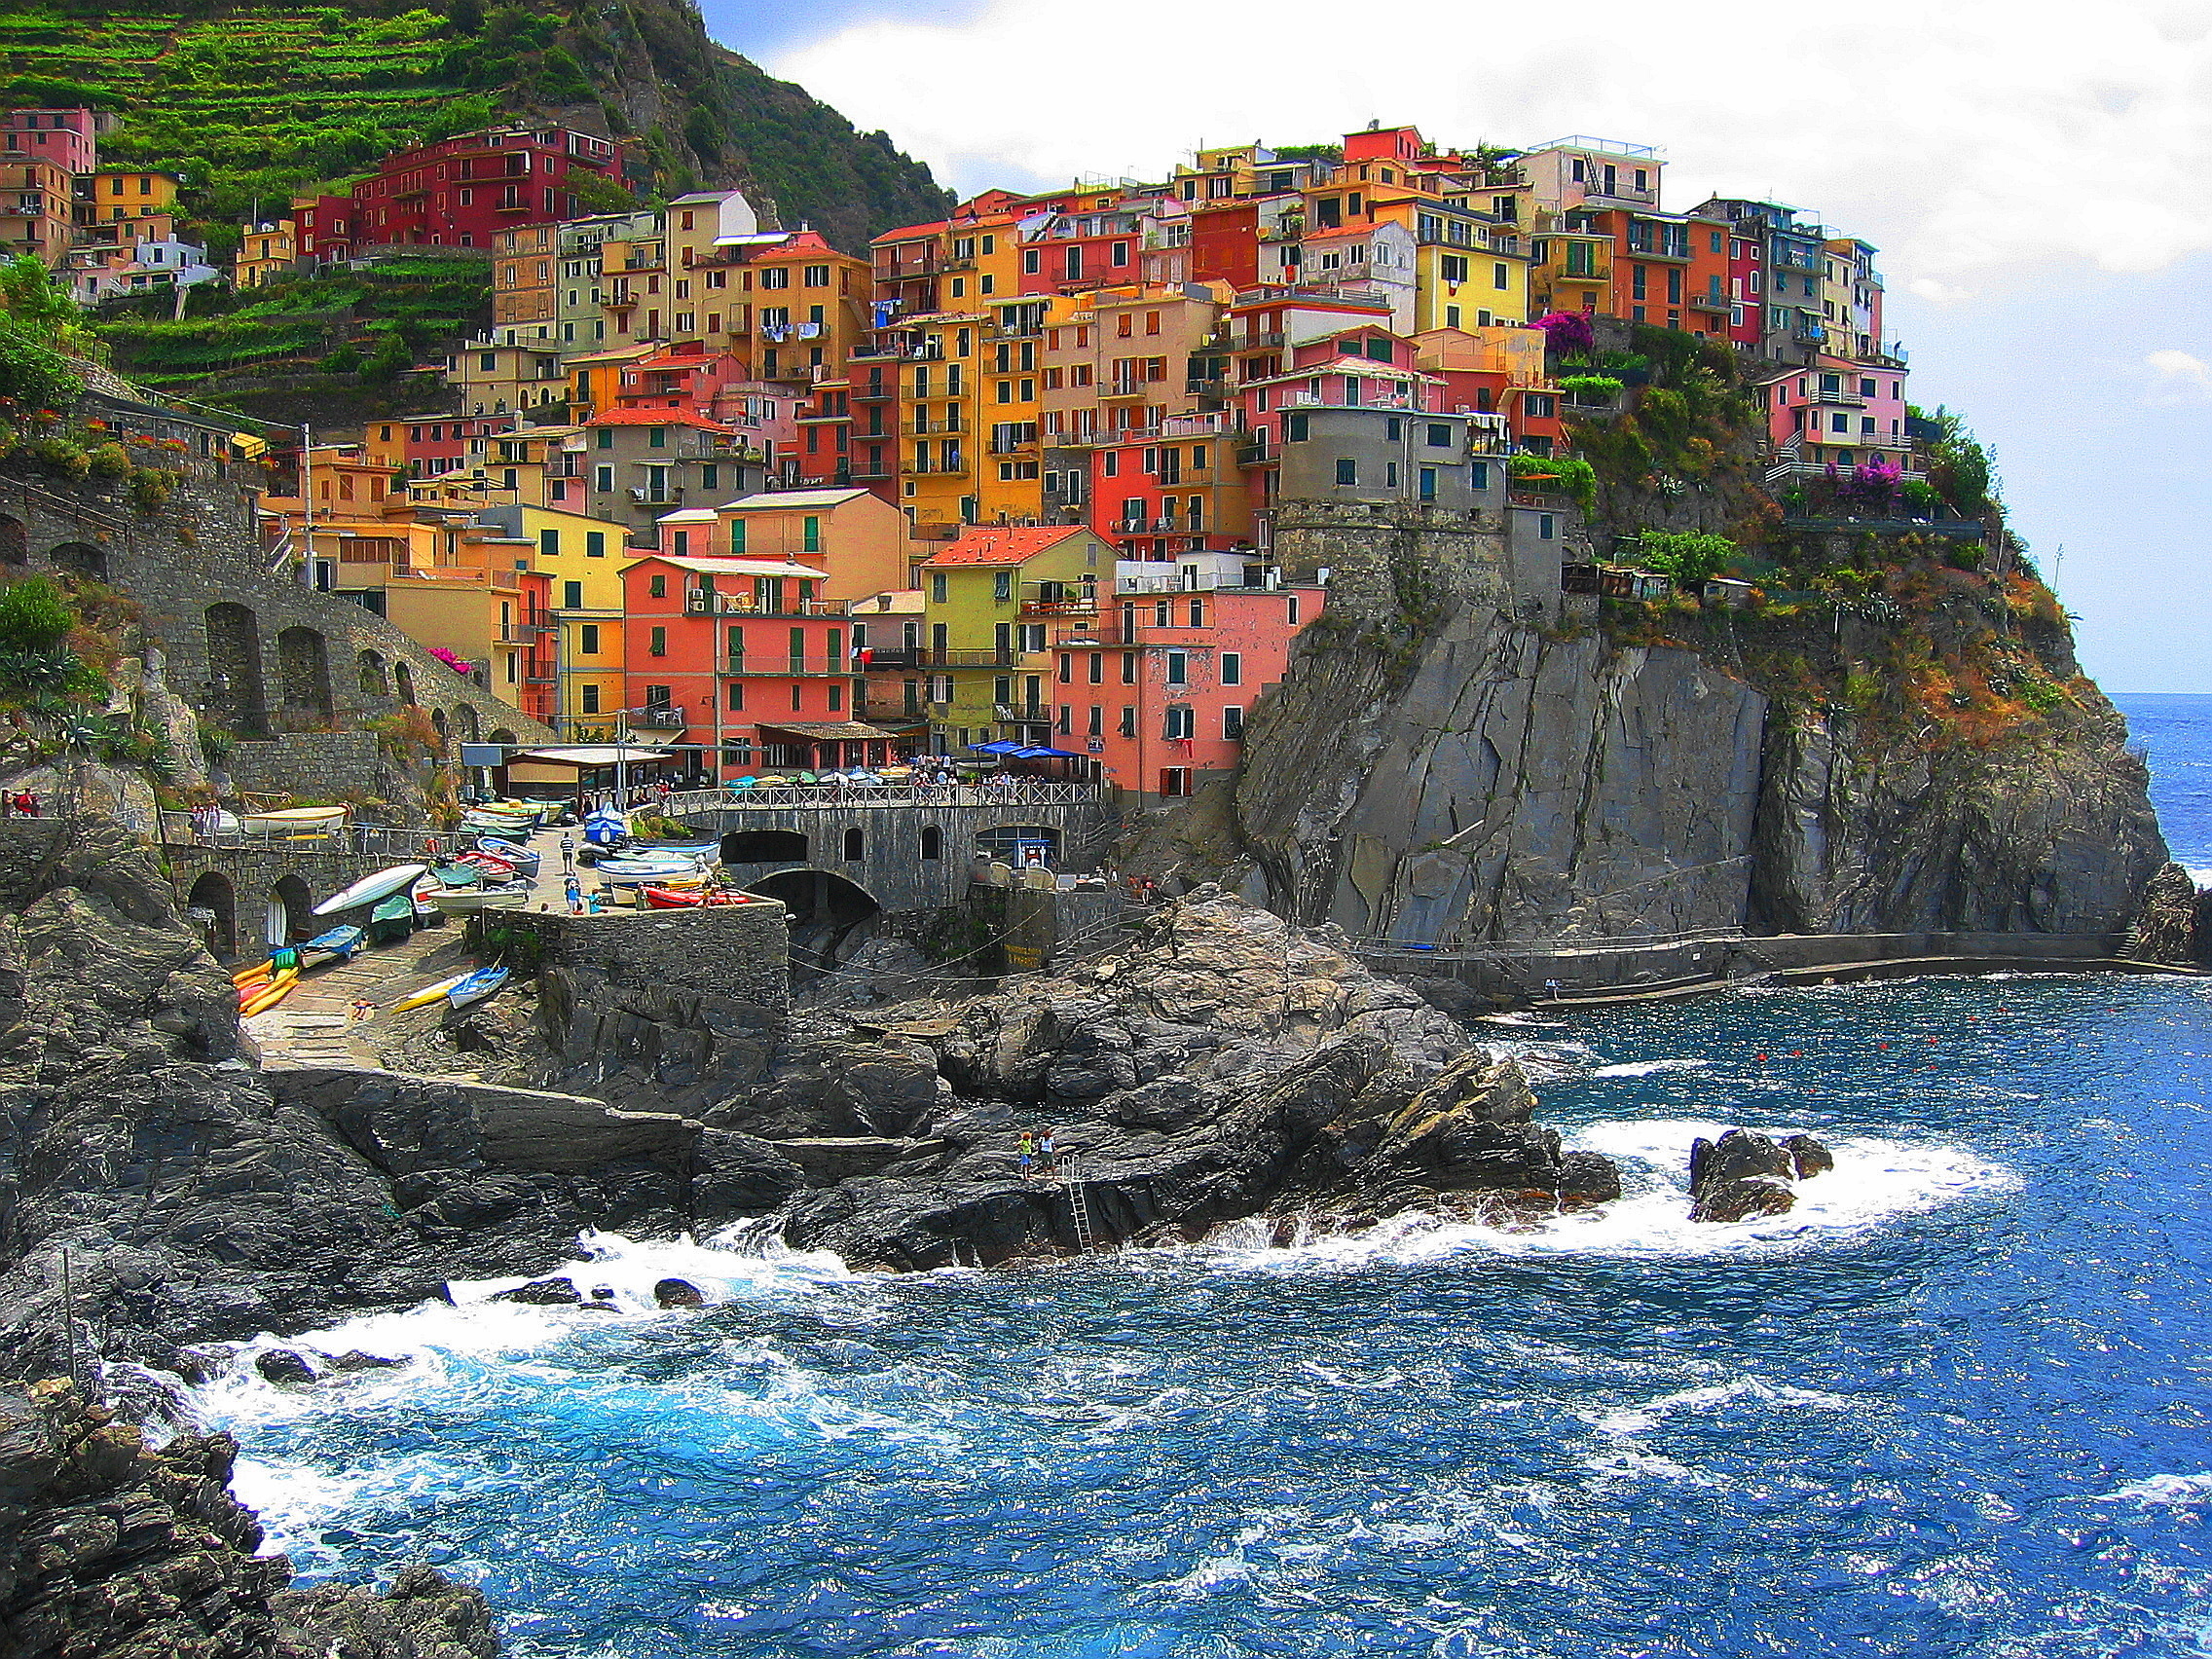 Cinque Terre - Italy Wallpaper (22260554) - Fanpop